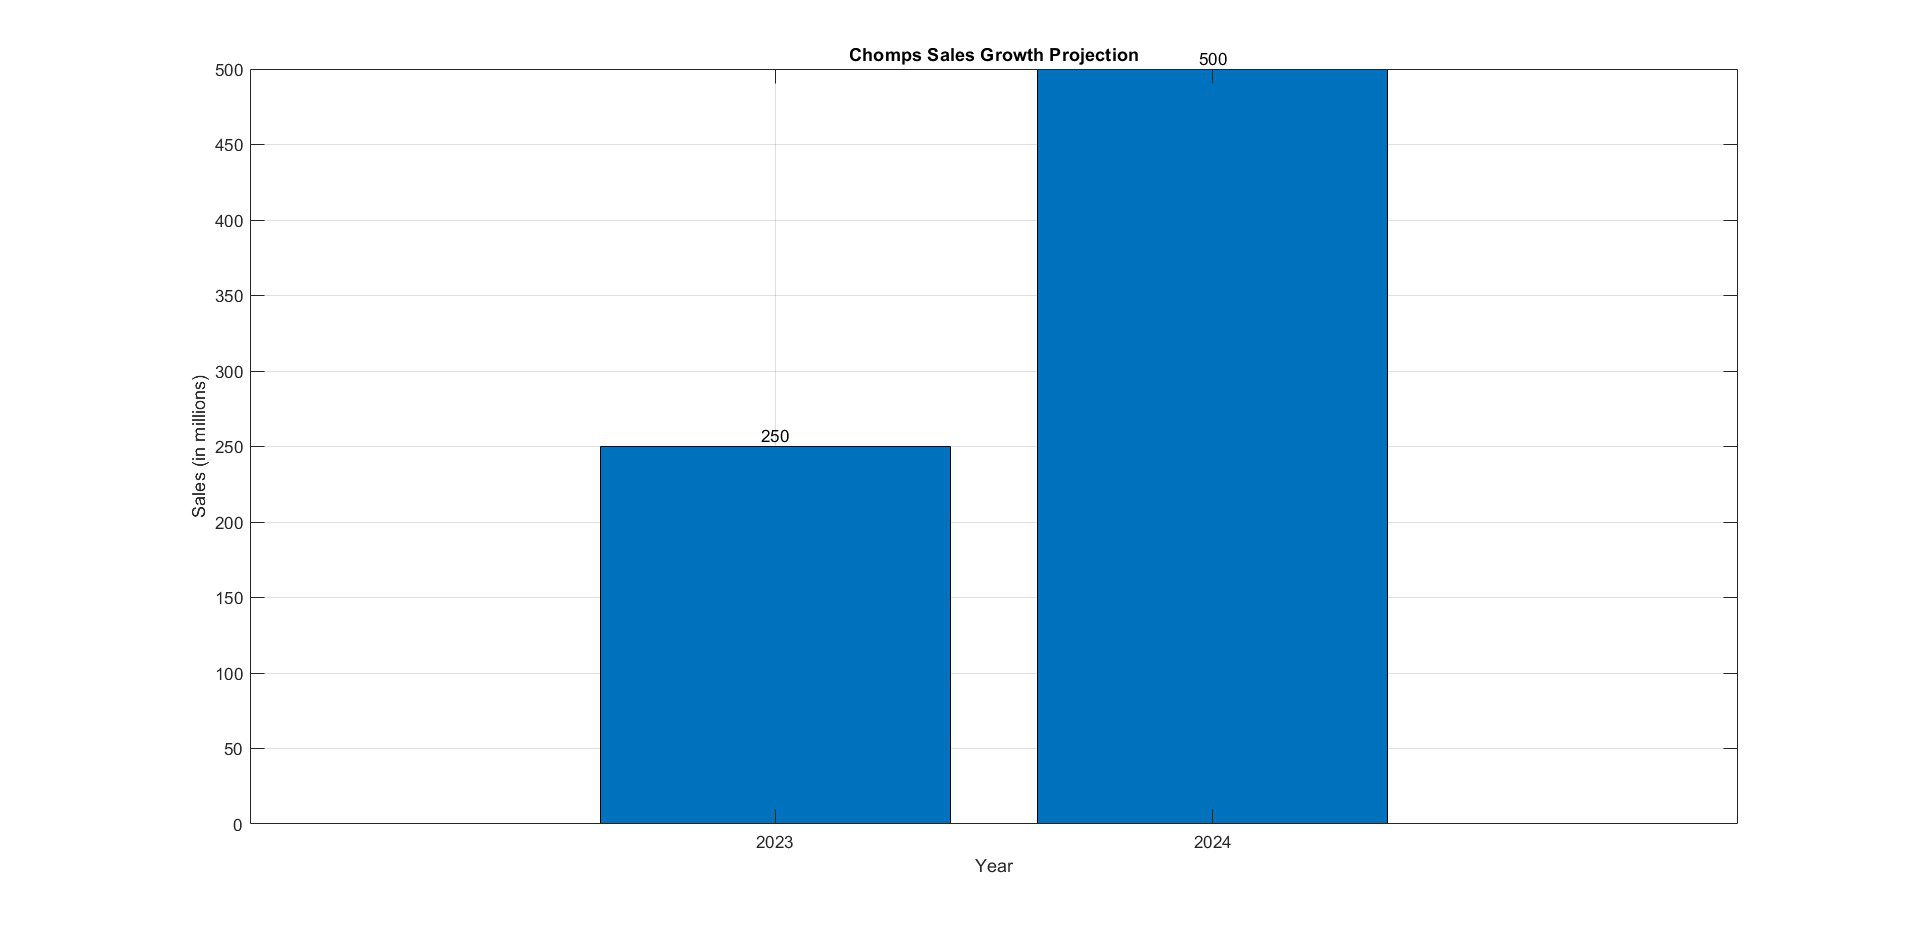 Chomps Sales Projection 2023 vs 2024